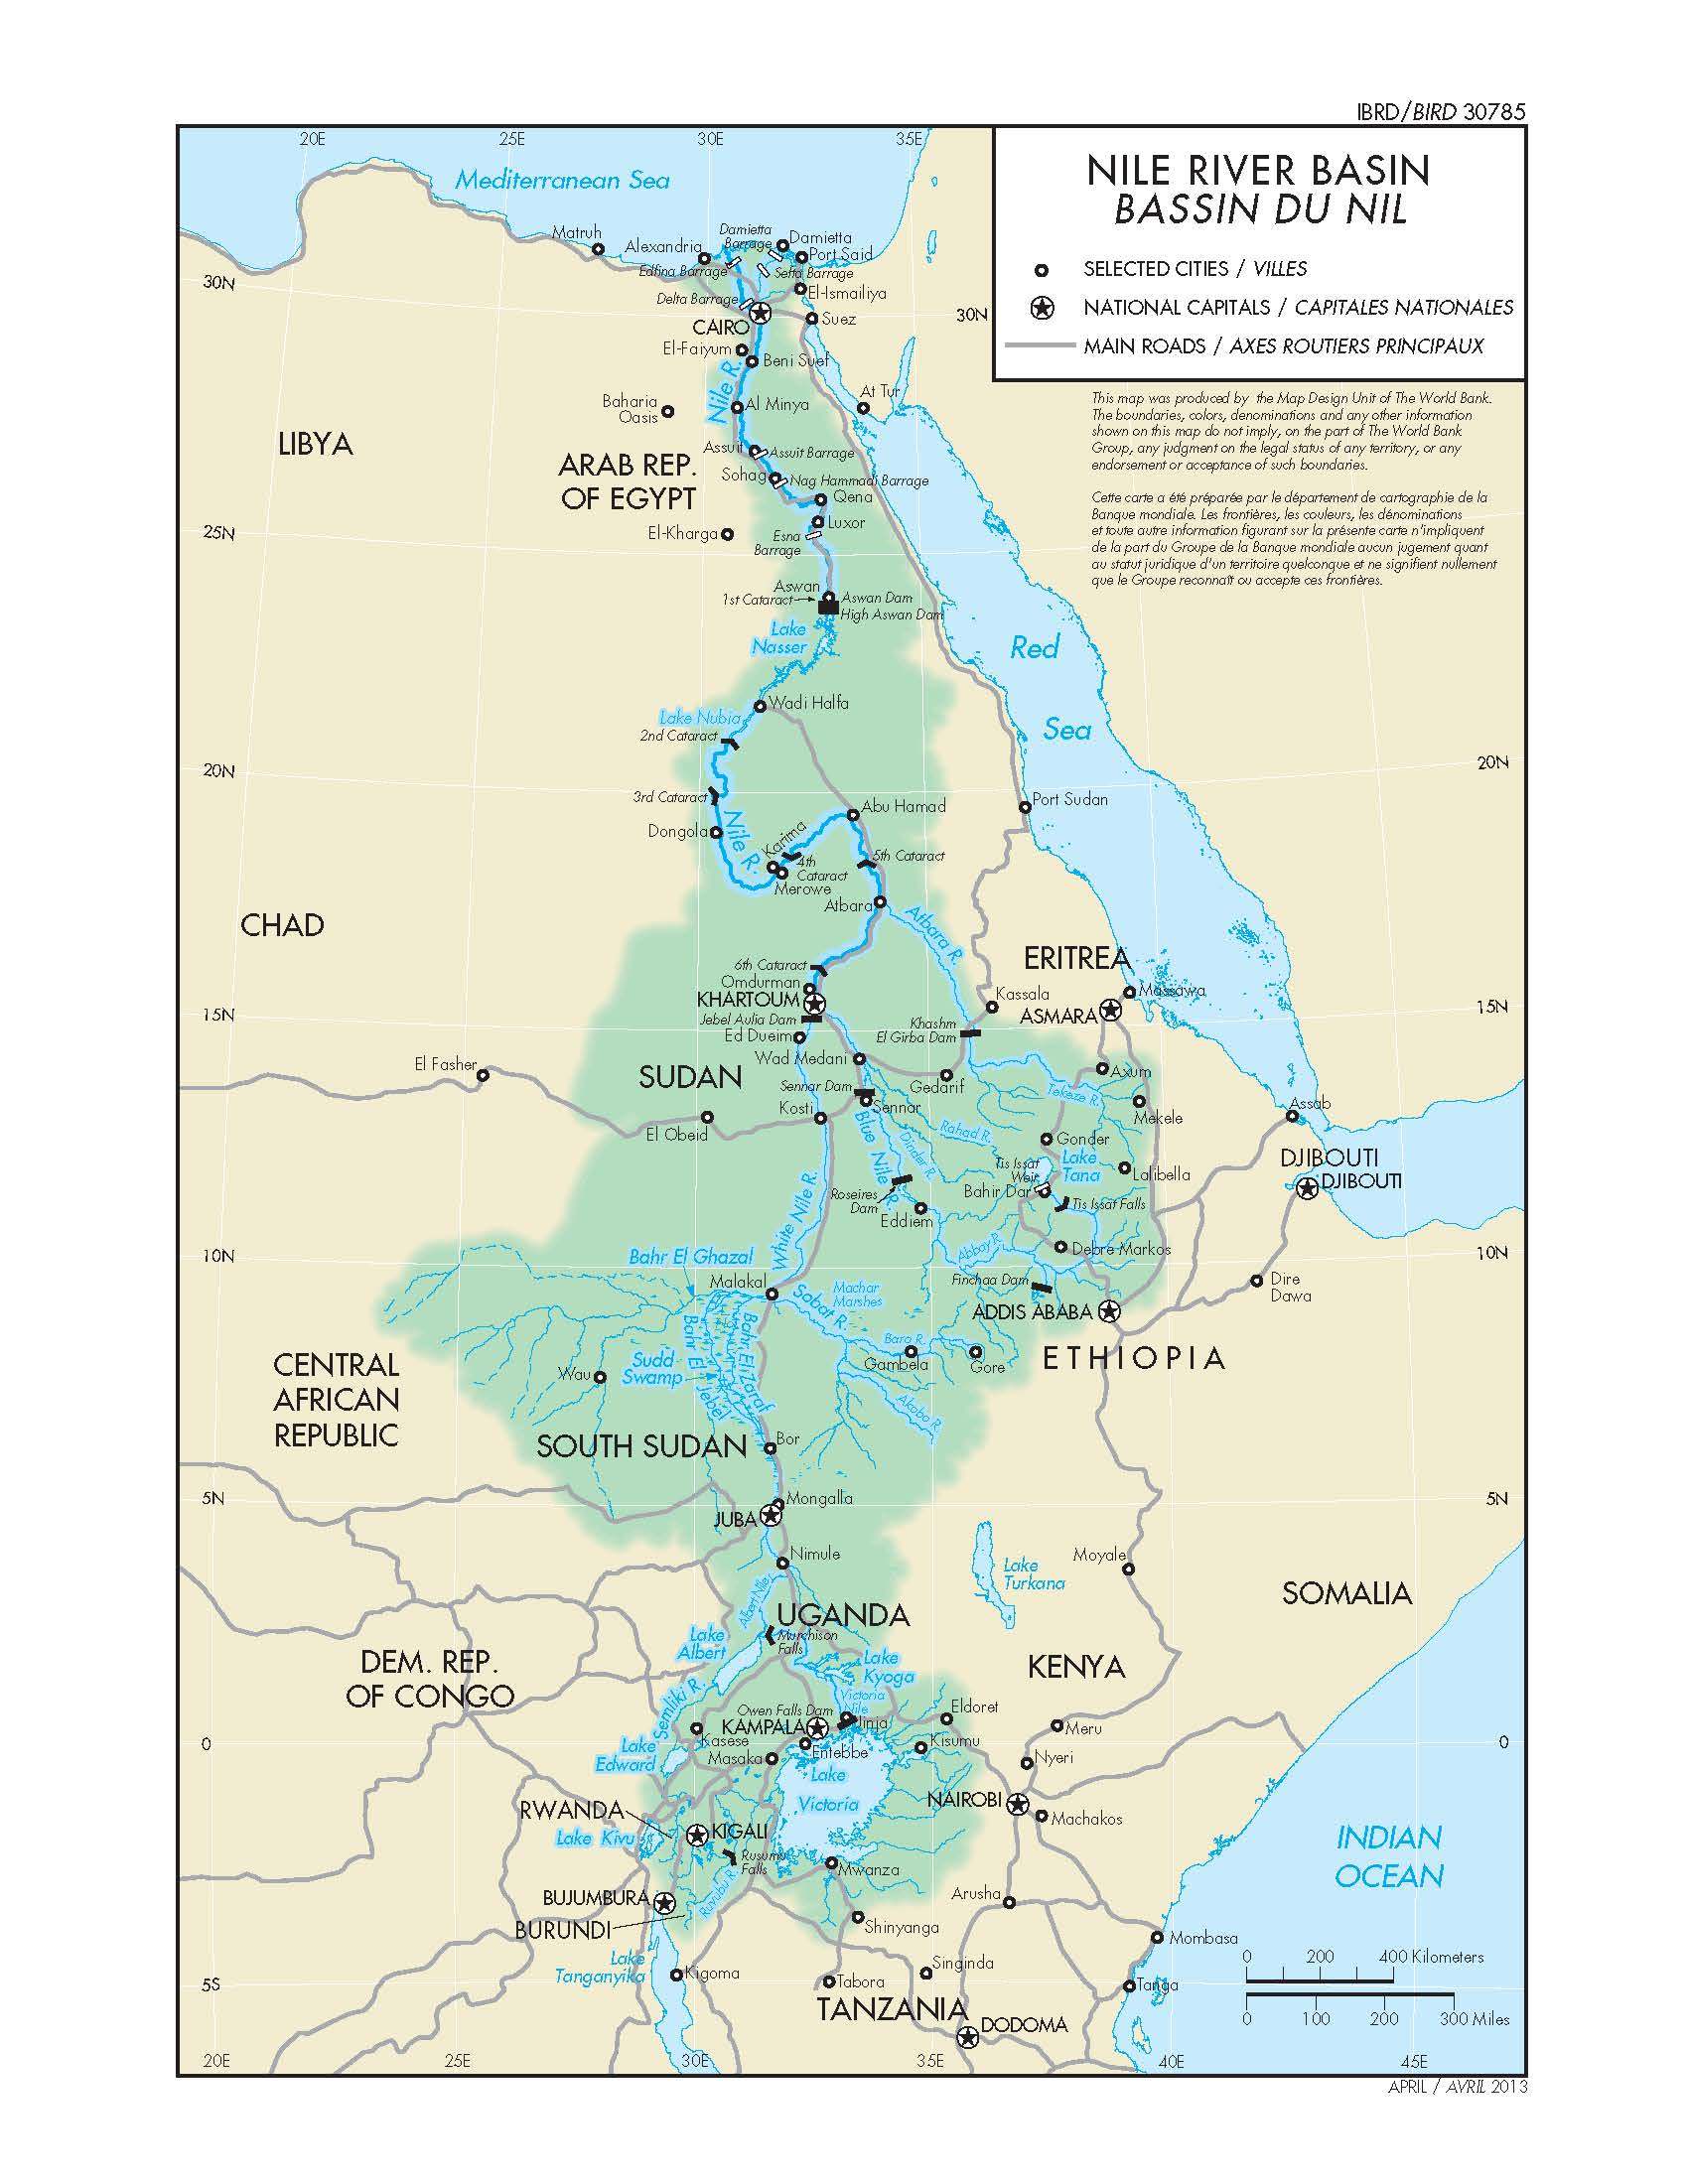 Map of the Nile Basin, World Bank, 2013